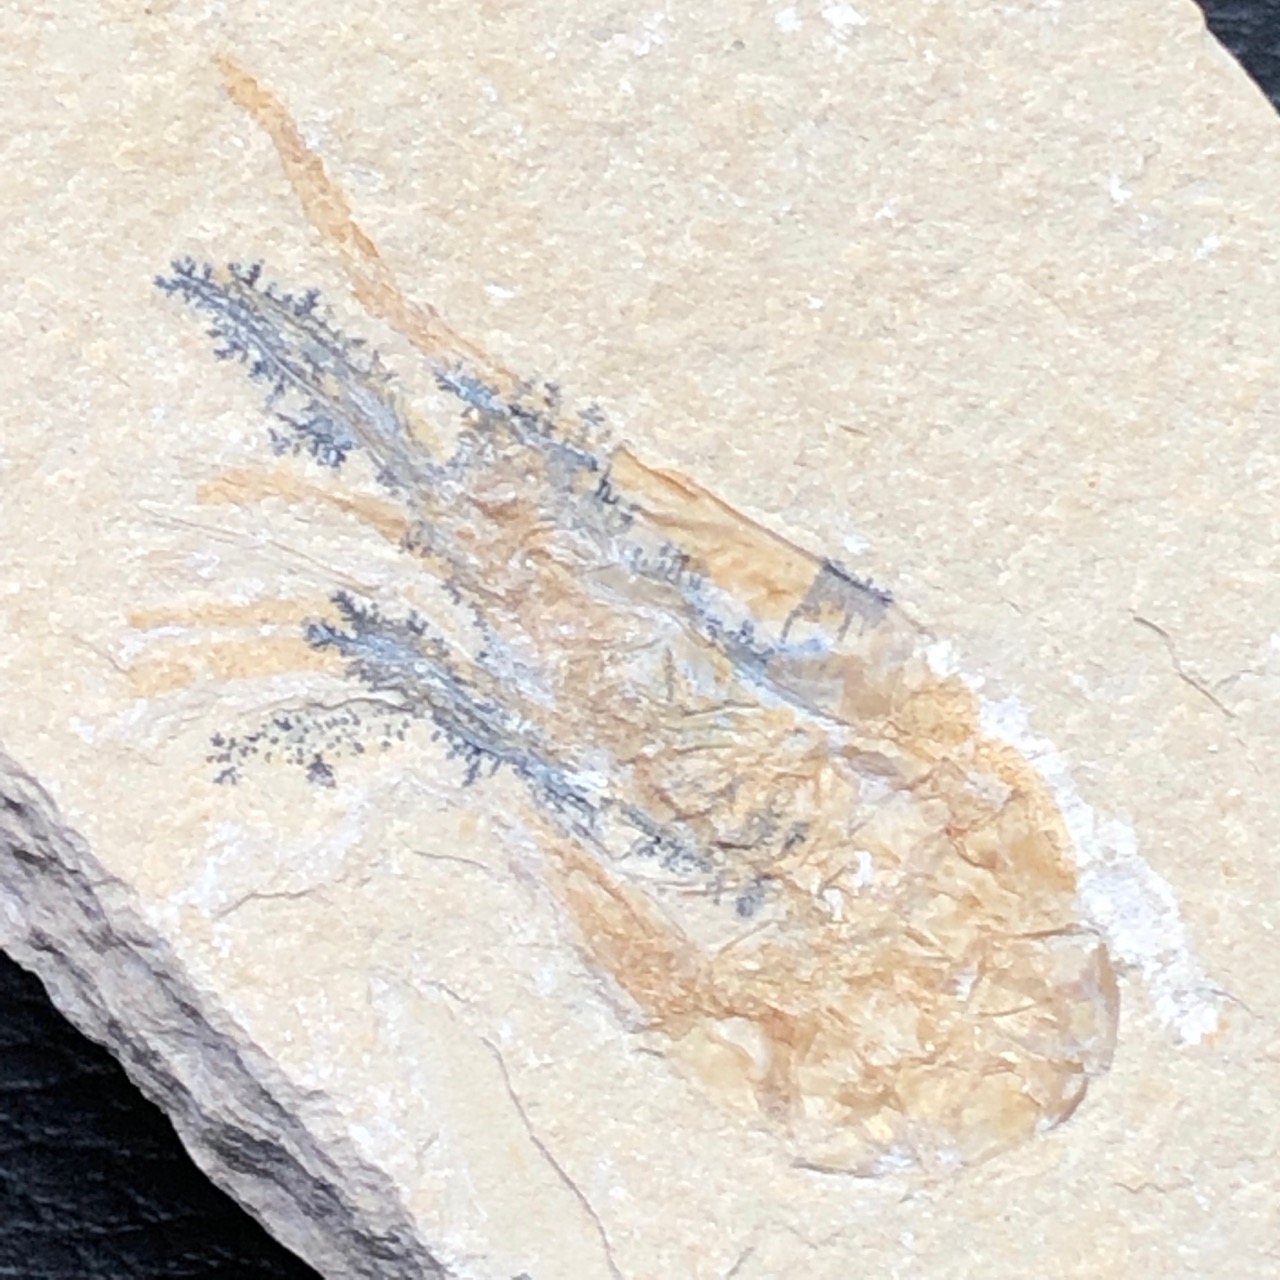 Crevette fossile Carpopenaeus callirostris d’Hajoula du Liban (réf cf2)